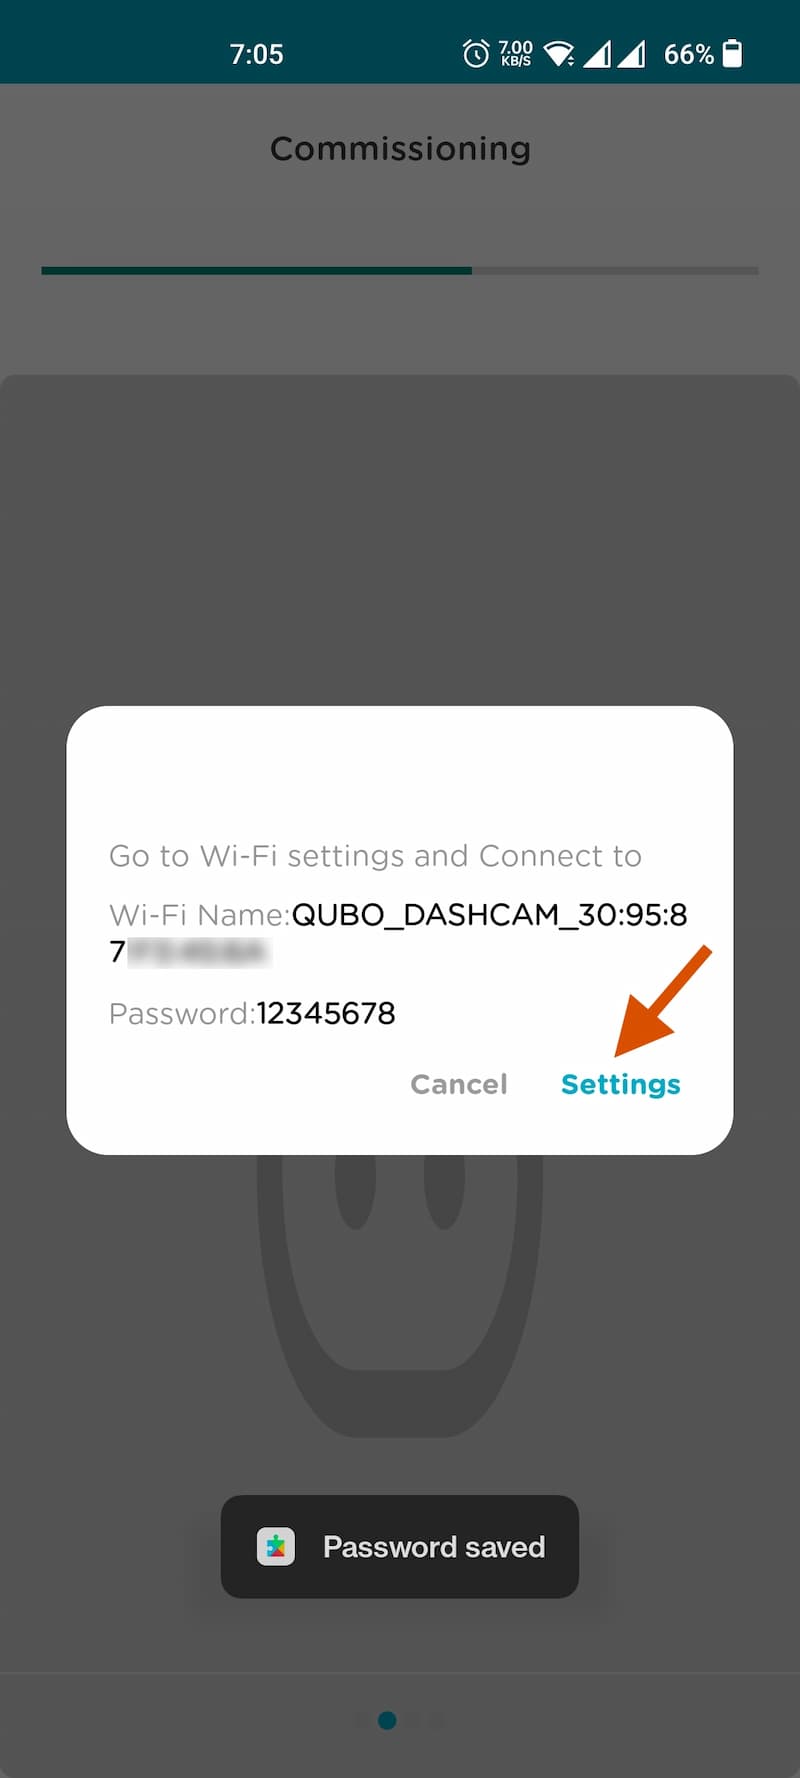 Qubo Dashcam Wi-Fi Settings